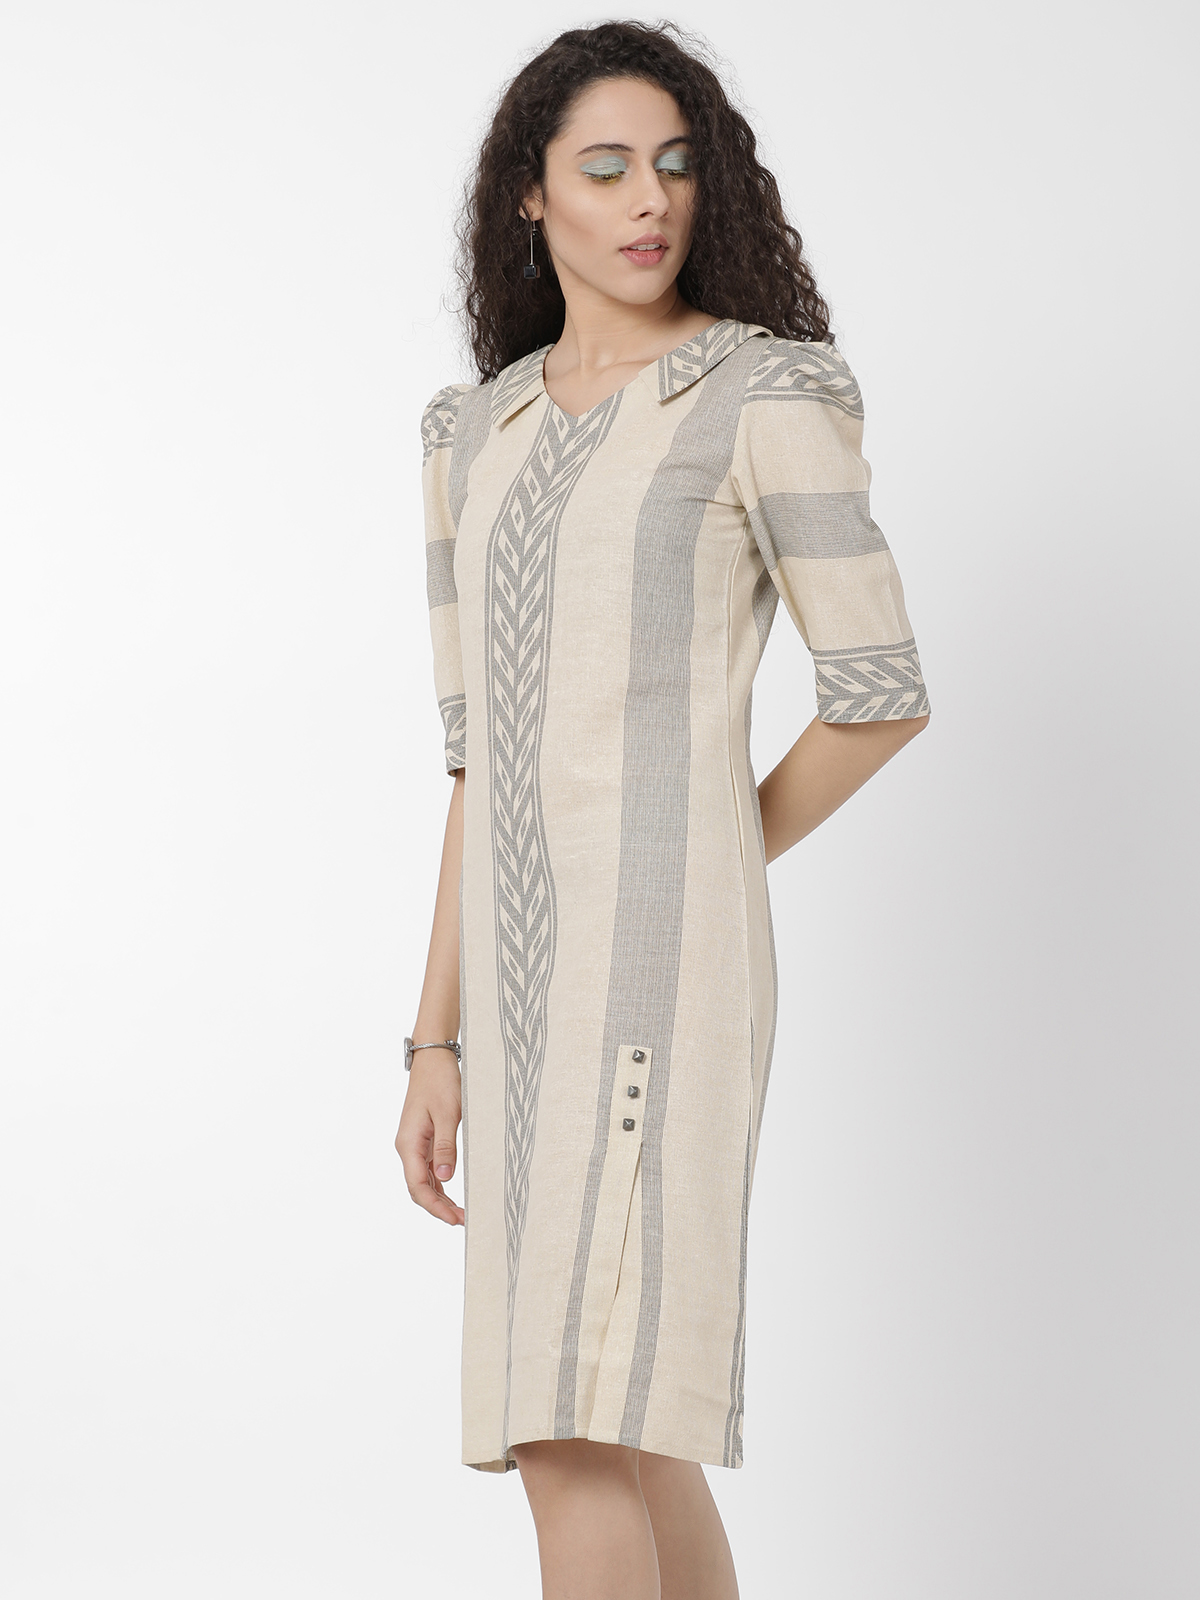 Smartly Design Vintage Print Beige Cotton Linen One Piece Dress